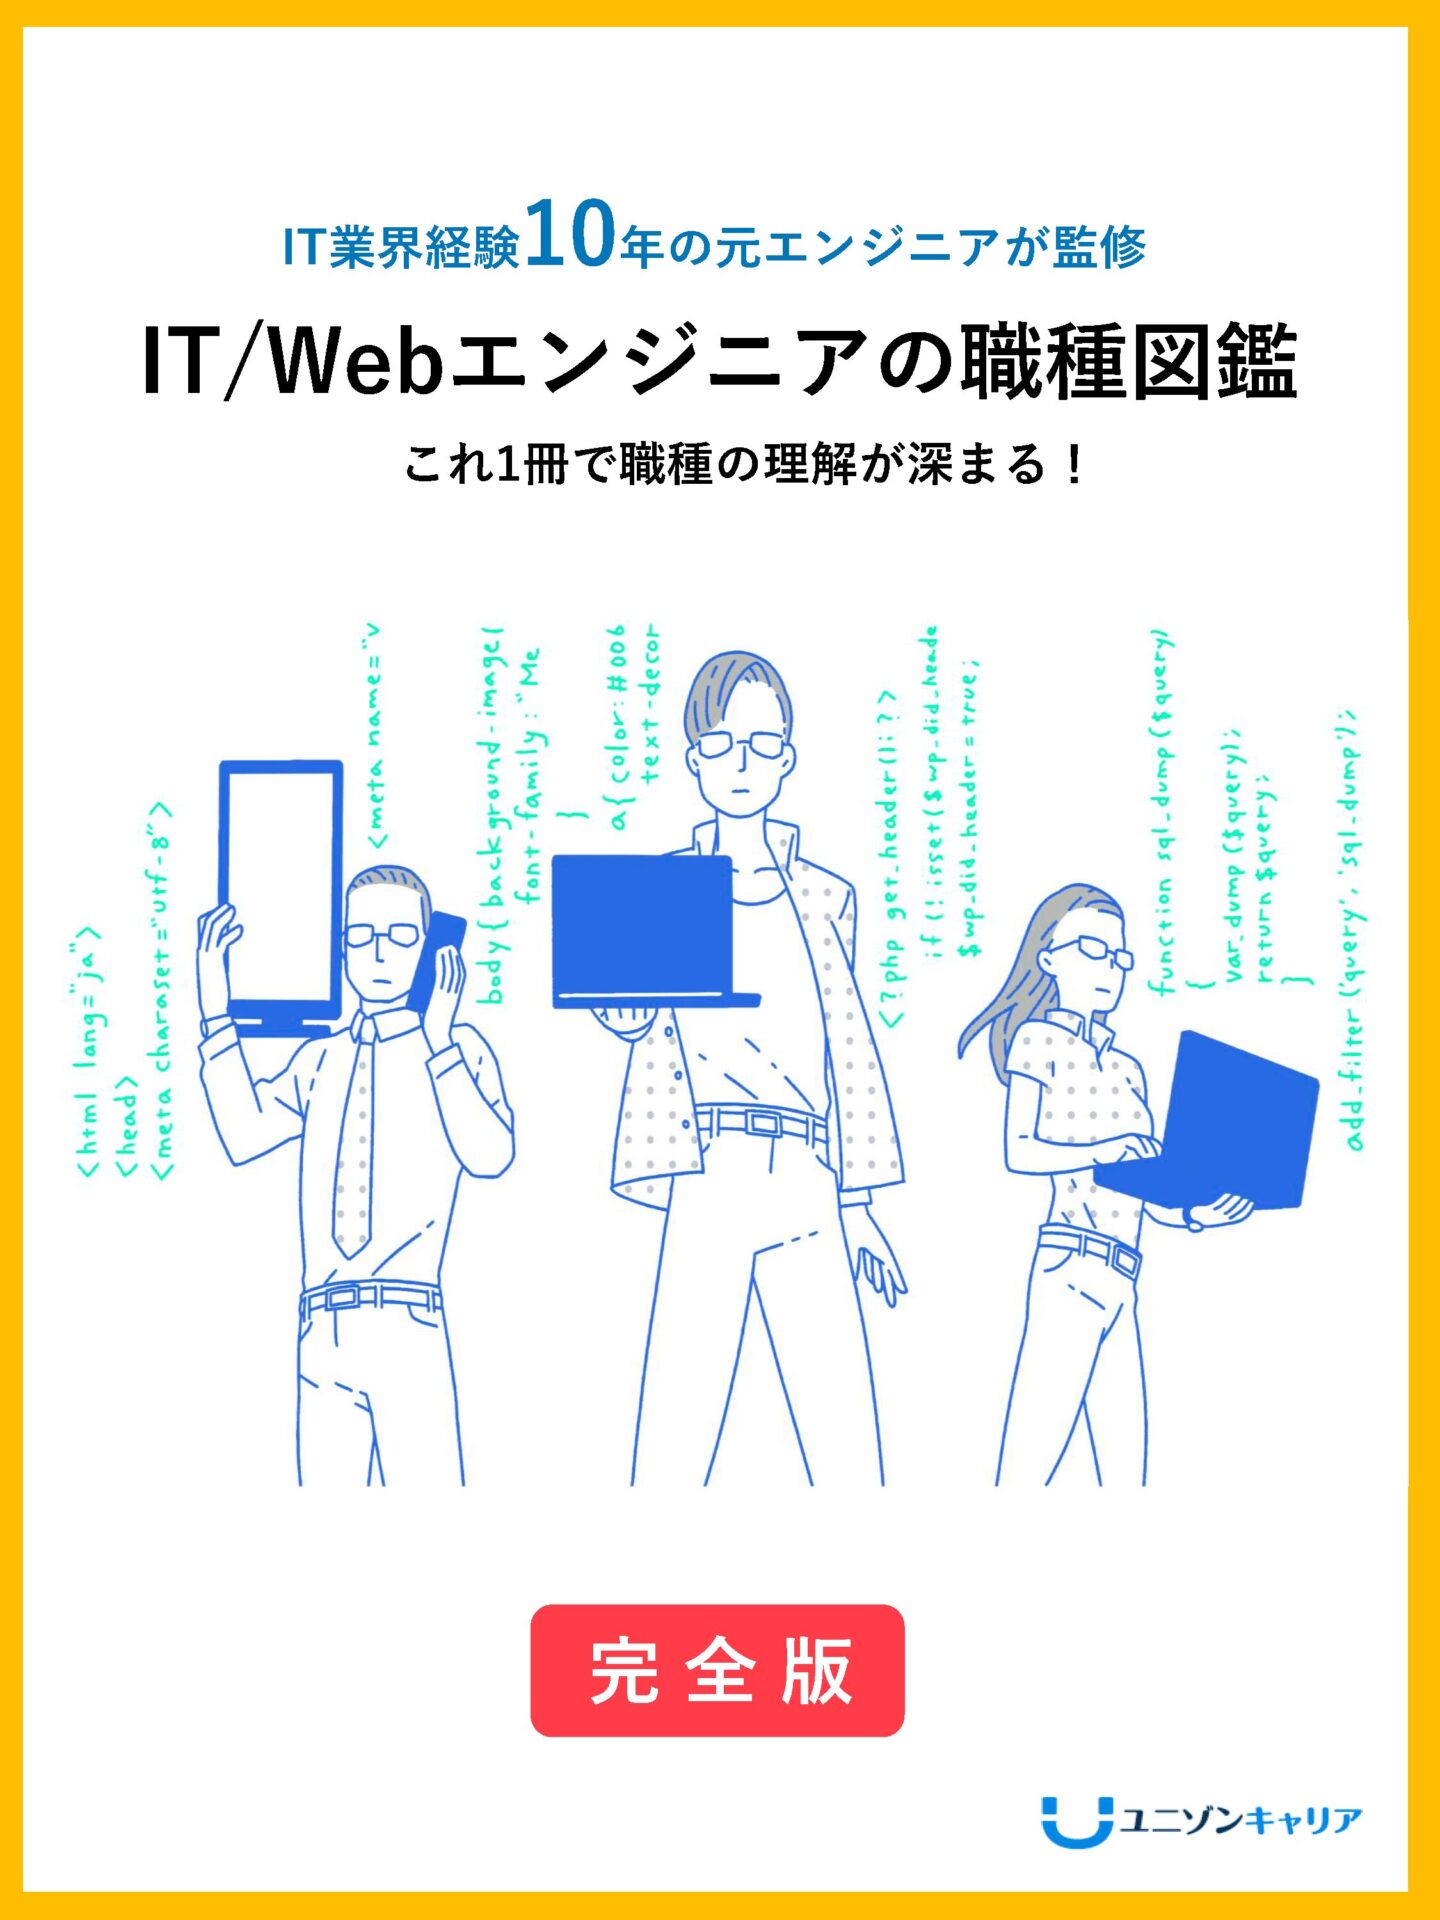 IT/Web業界の職種図鑑